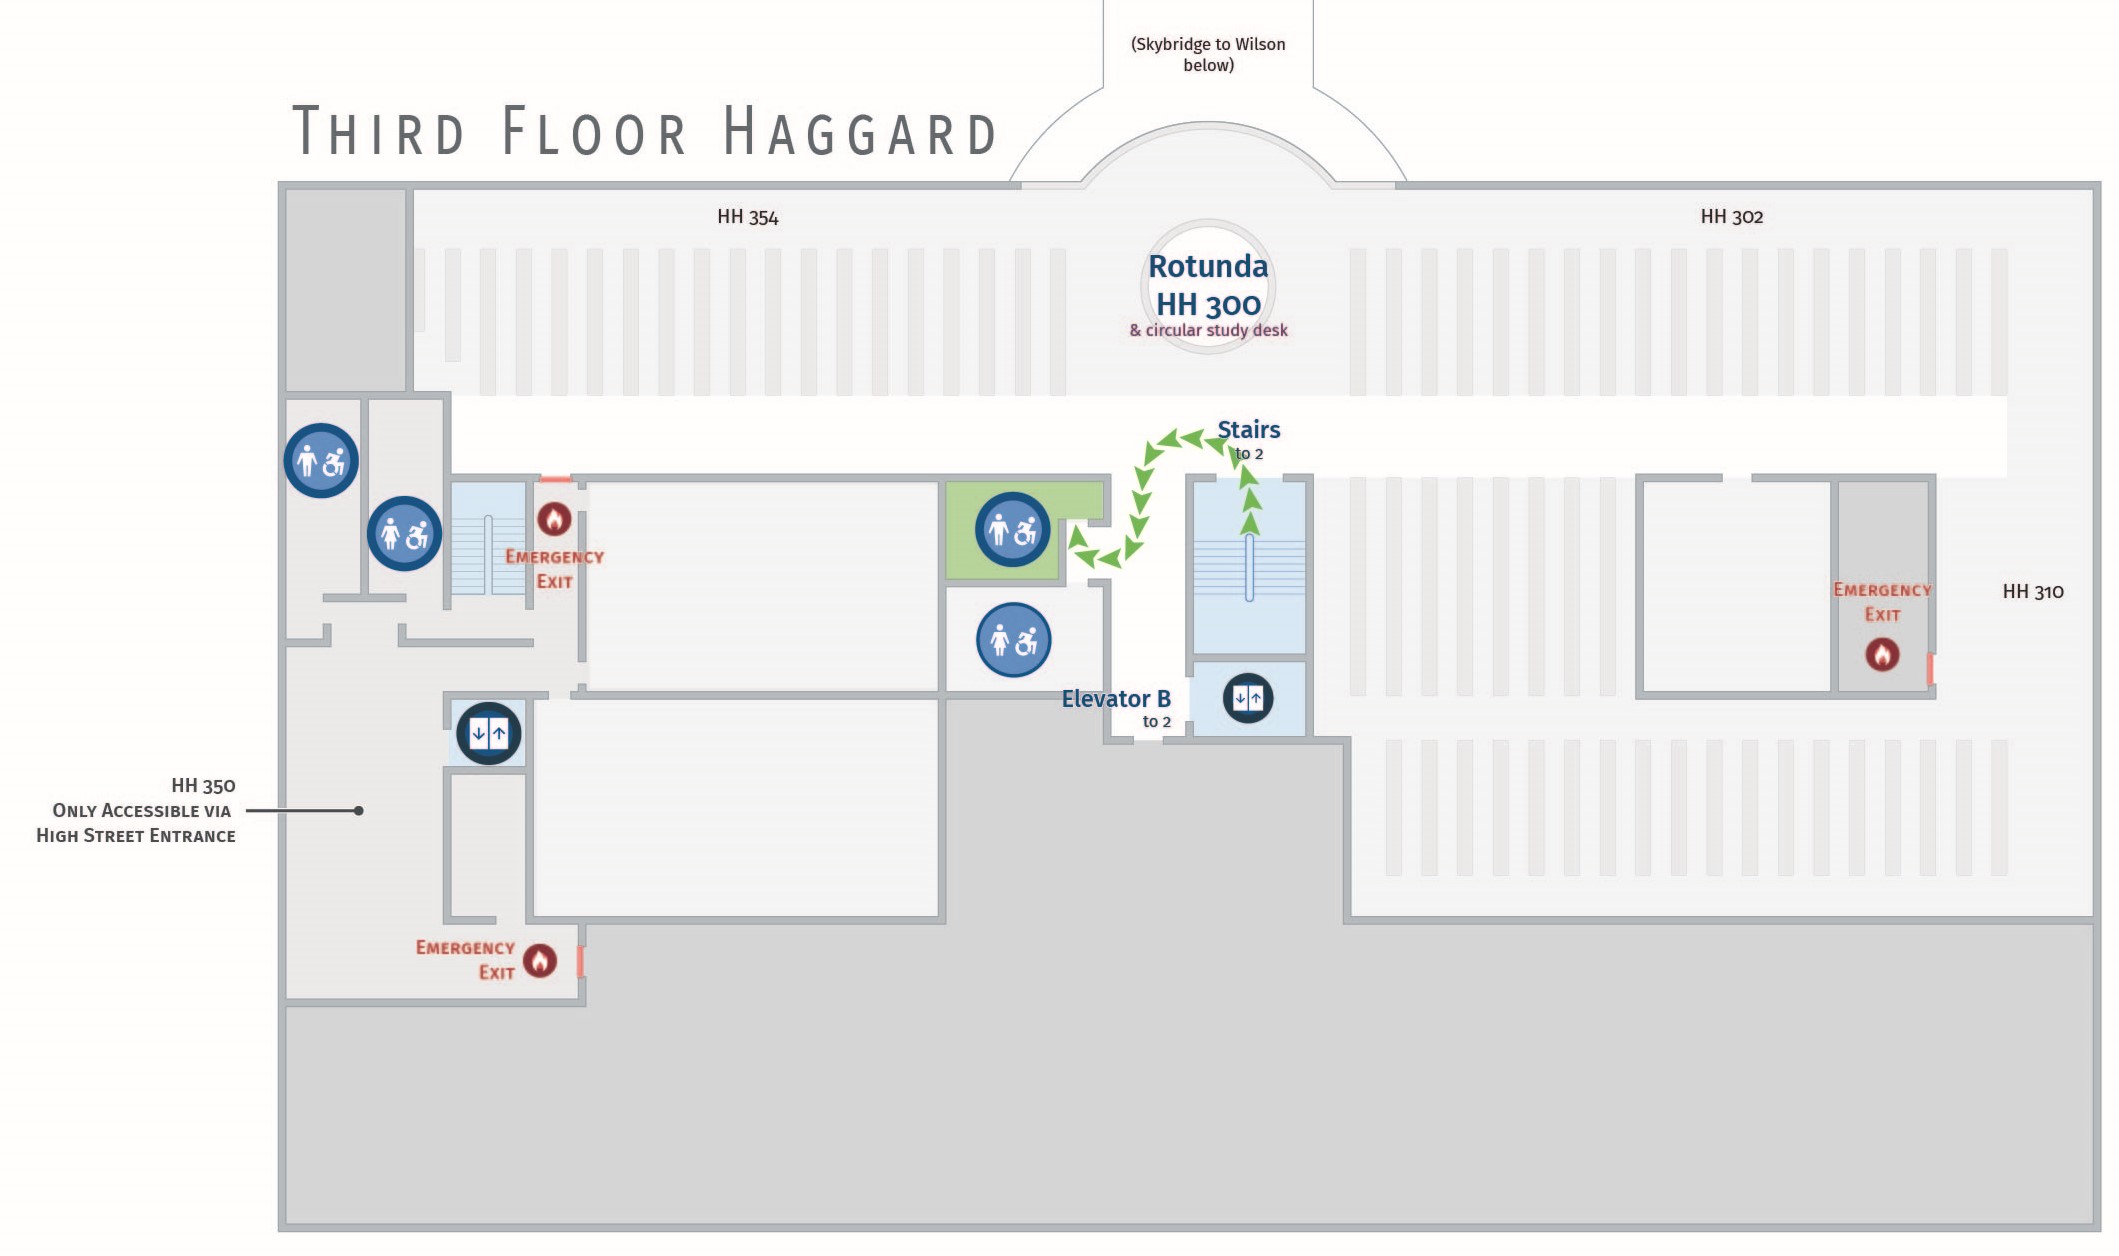 Floor plan, third floor of Haggard with path to men's restroom. Haggard 341.